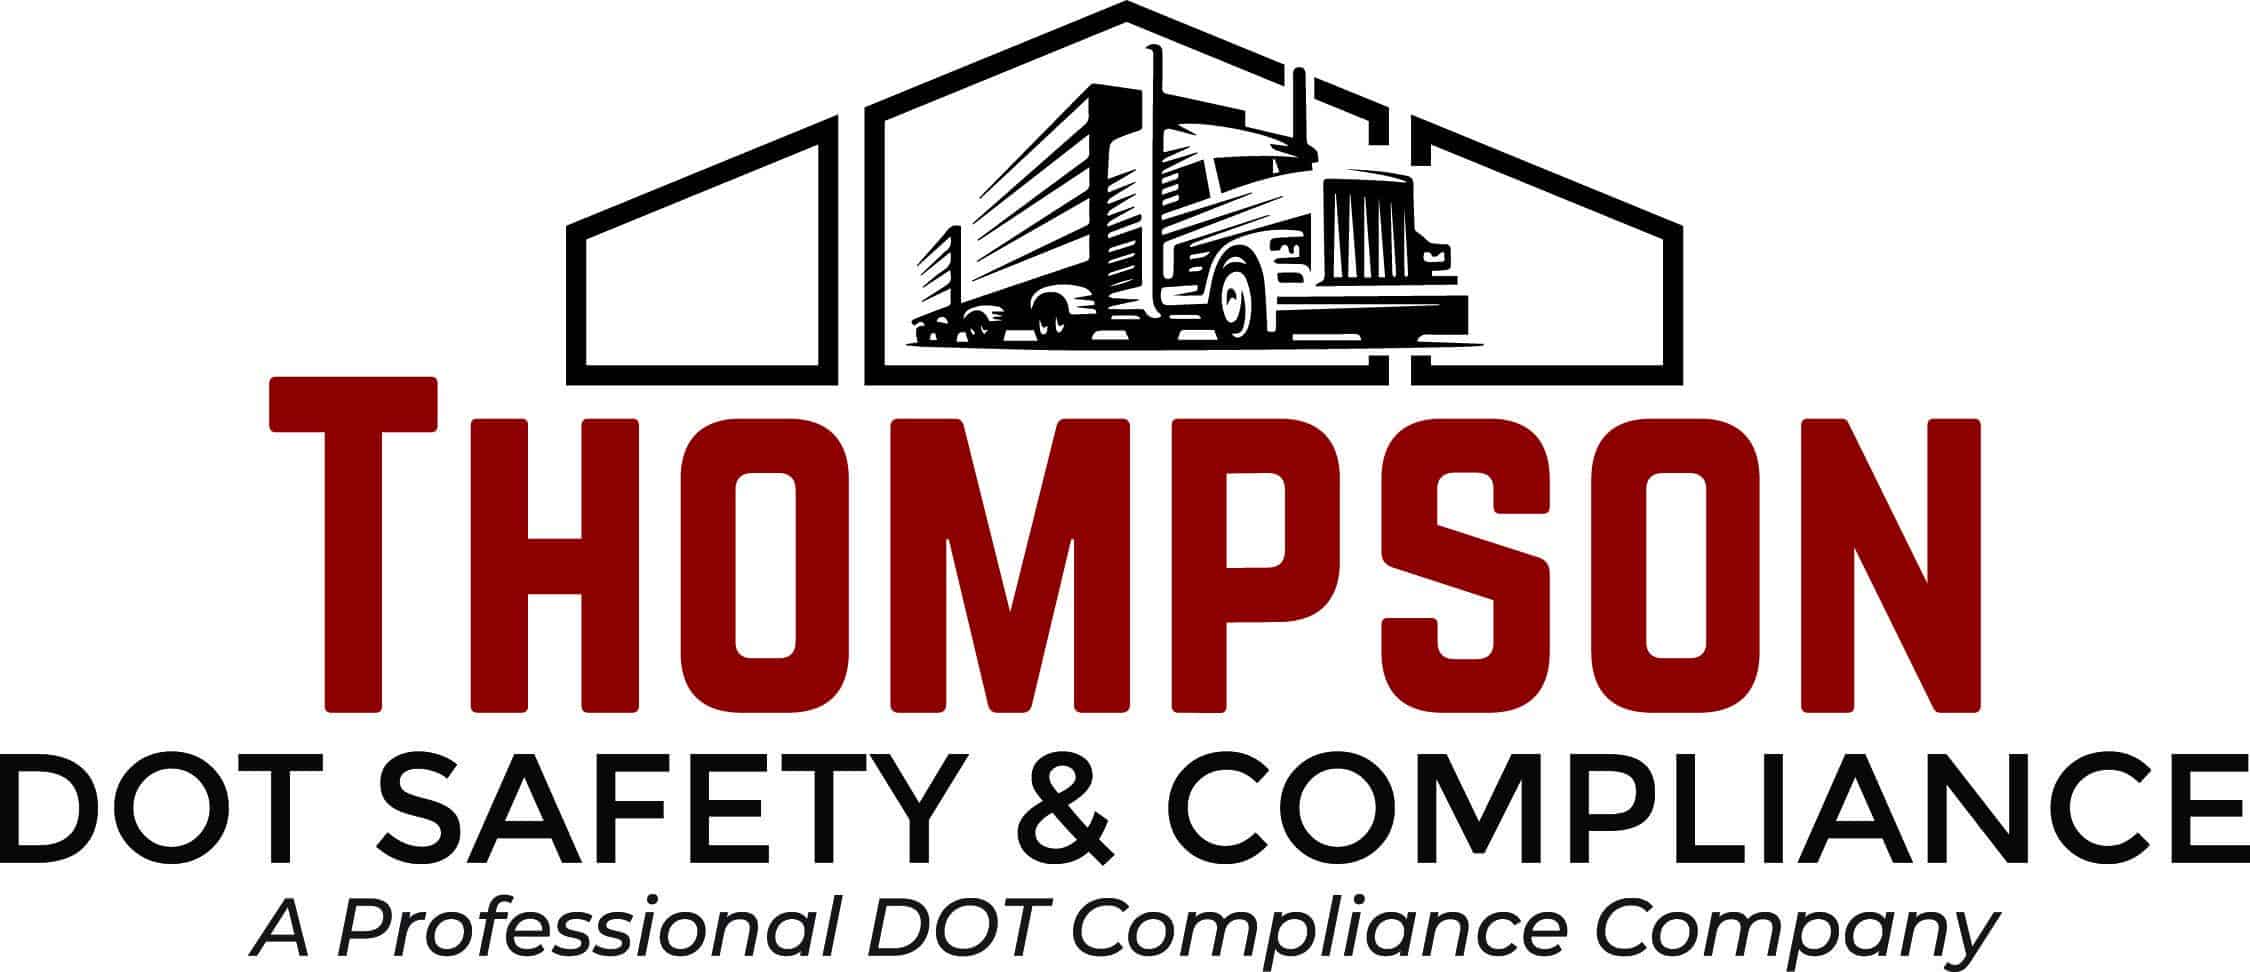 DOT Safety & Compliance